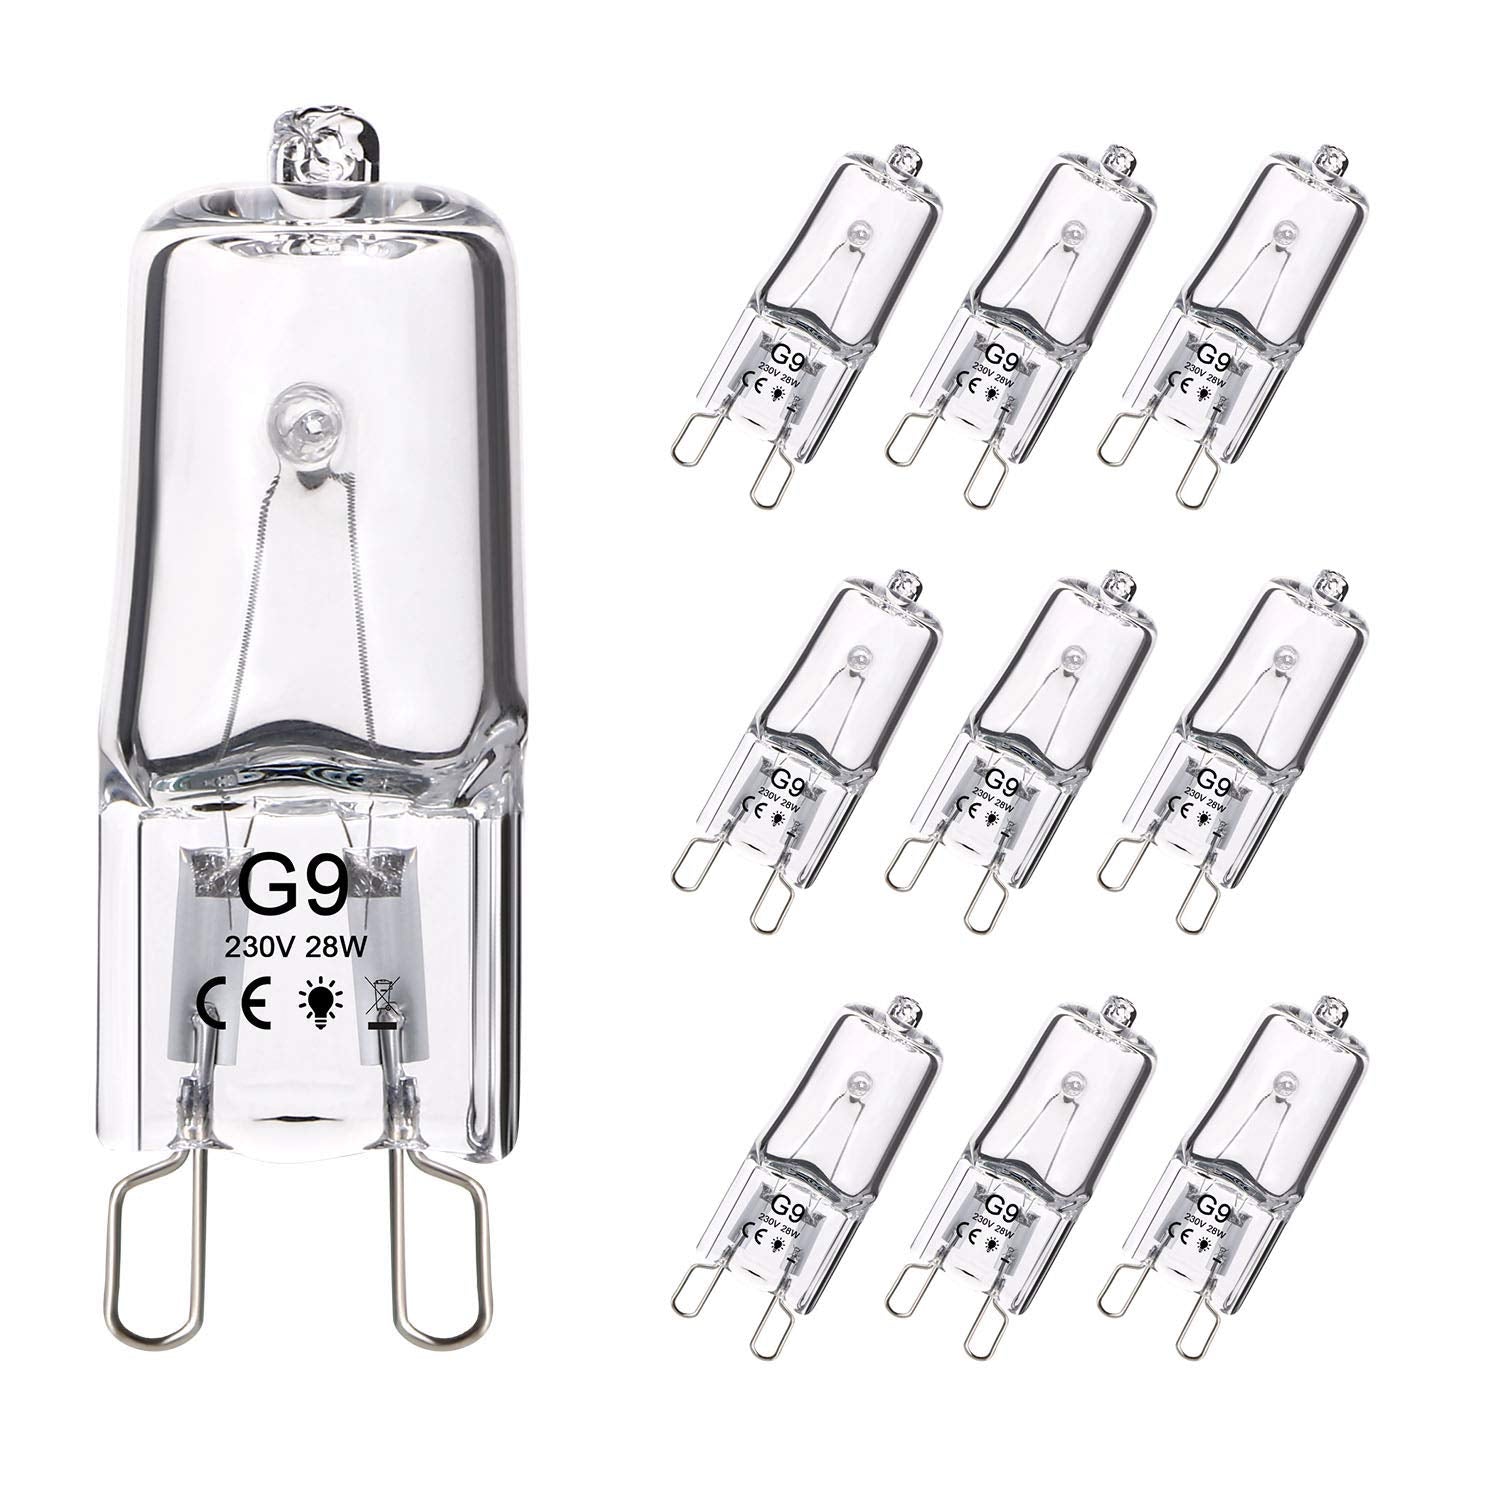 Vicloon G9 Halogen Bulbs, 10 Pcs 28W G9 Light Bulbs, 360 Degrees Beam Angle Energy Saving Lamp, 230V 370Lm 2800K Warm White